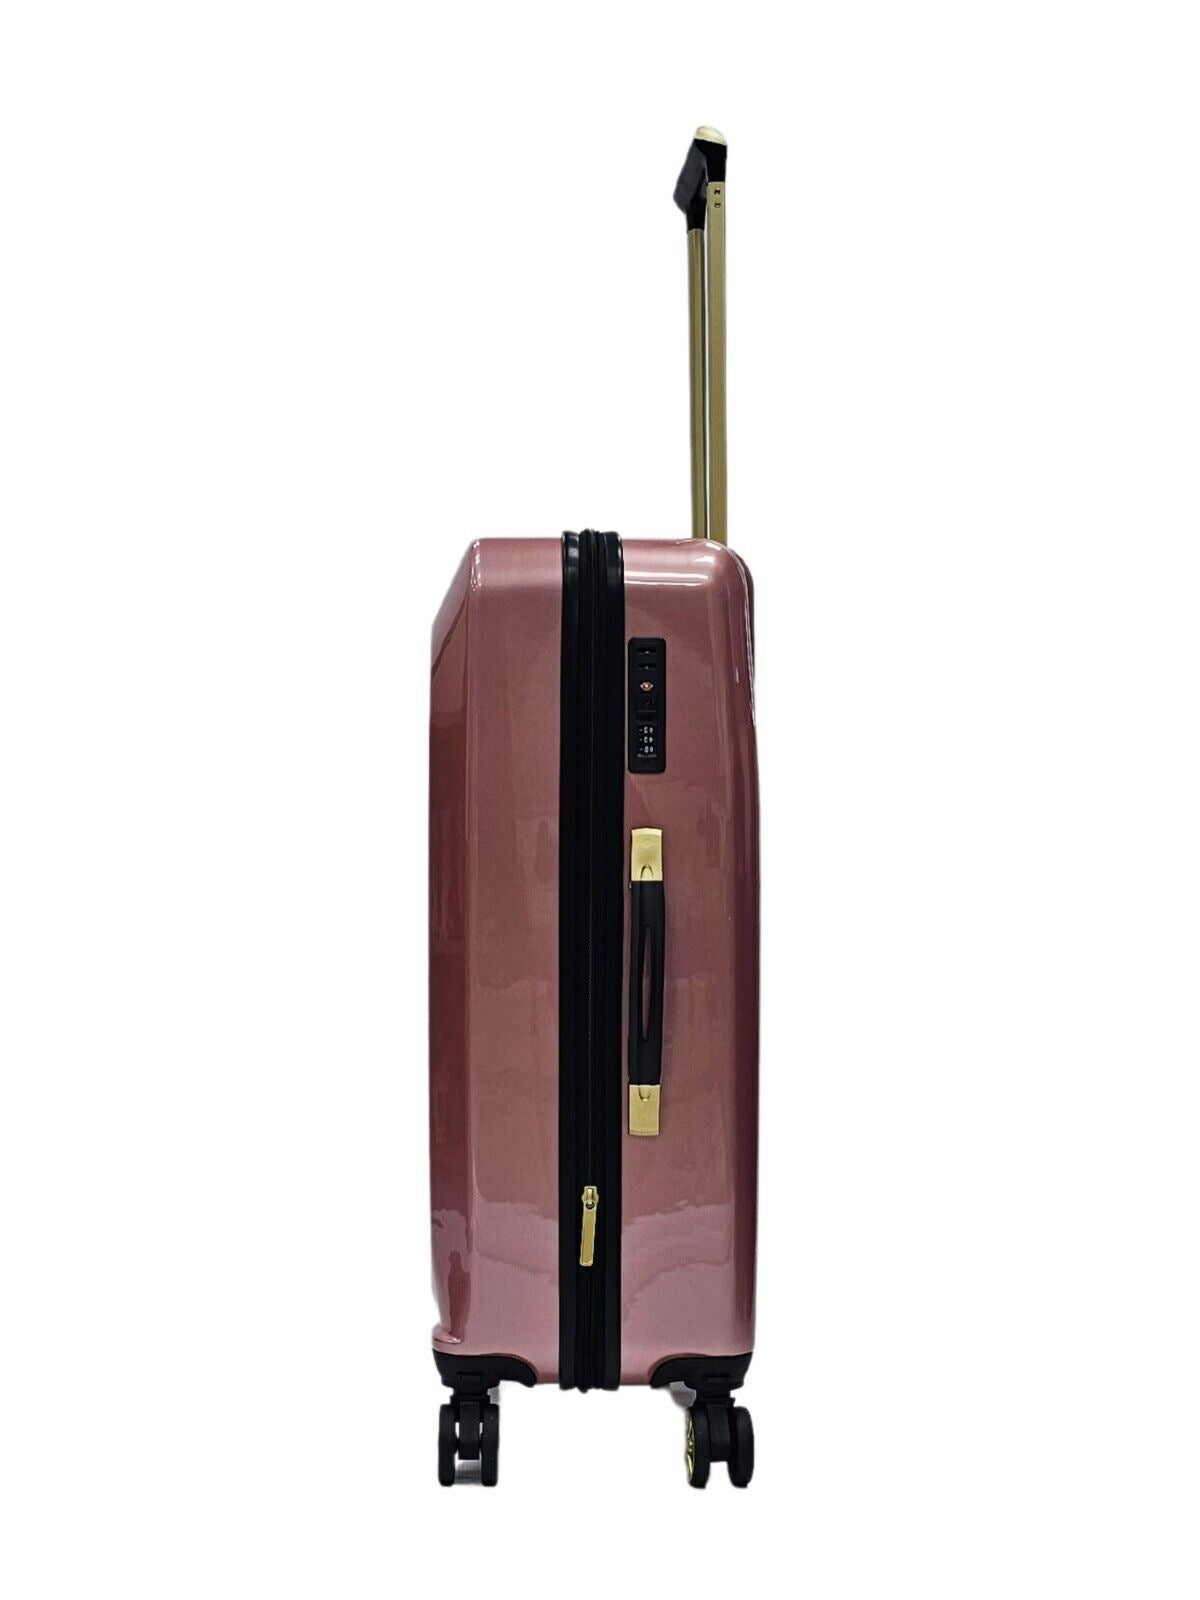 Butler Medium Hard Shell Suitcase in Pink